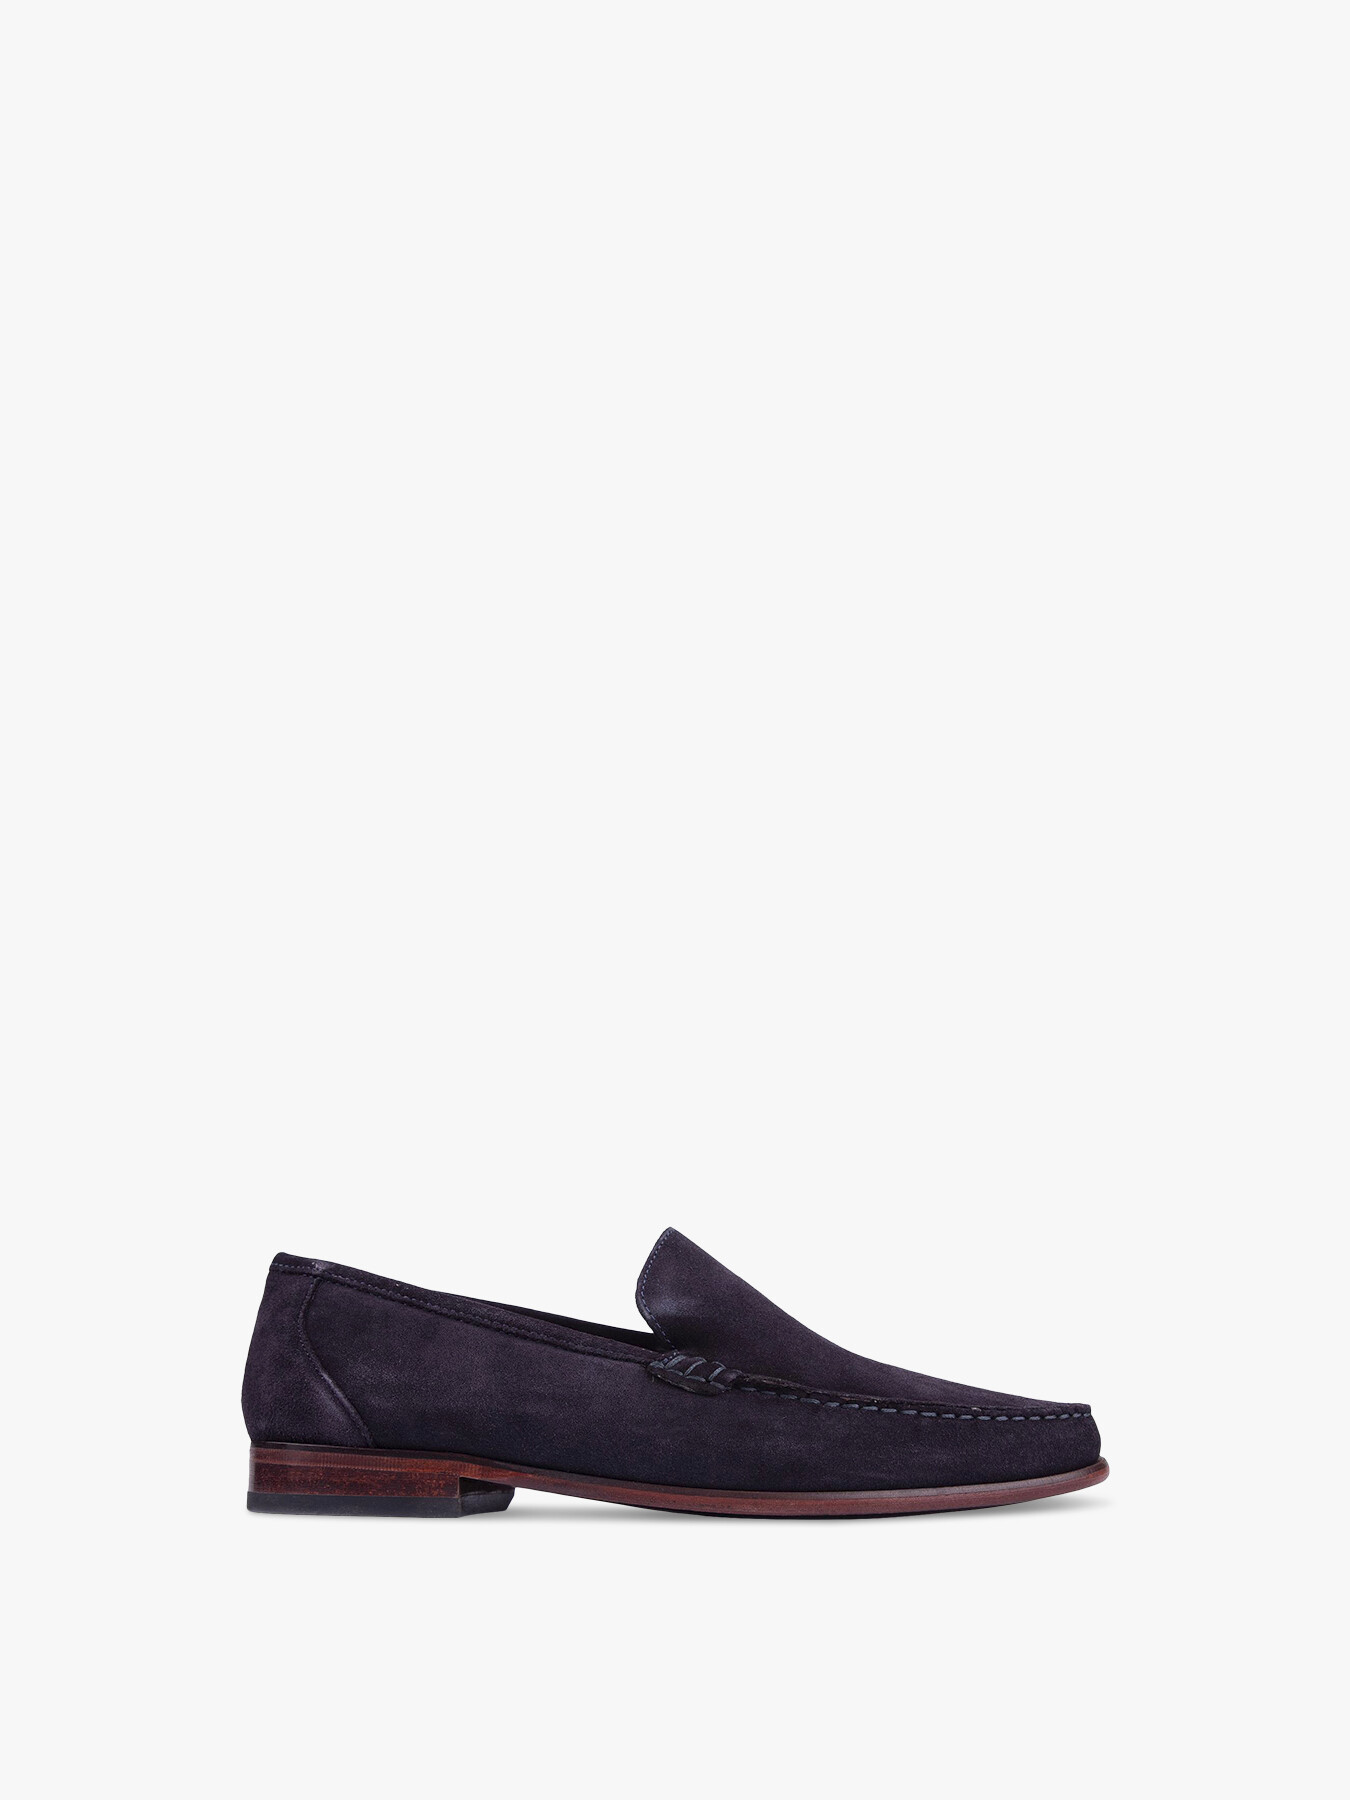 Sole Men's  Blinco Loafer Shoes